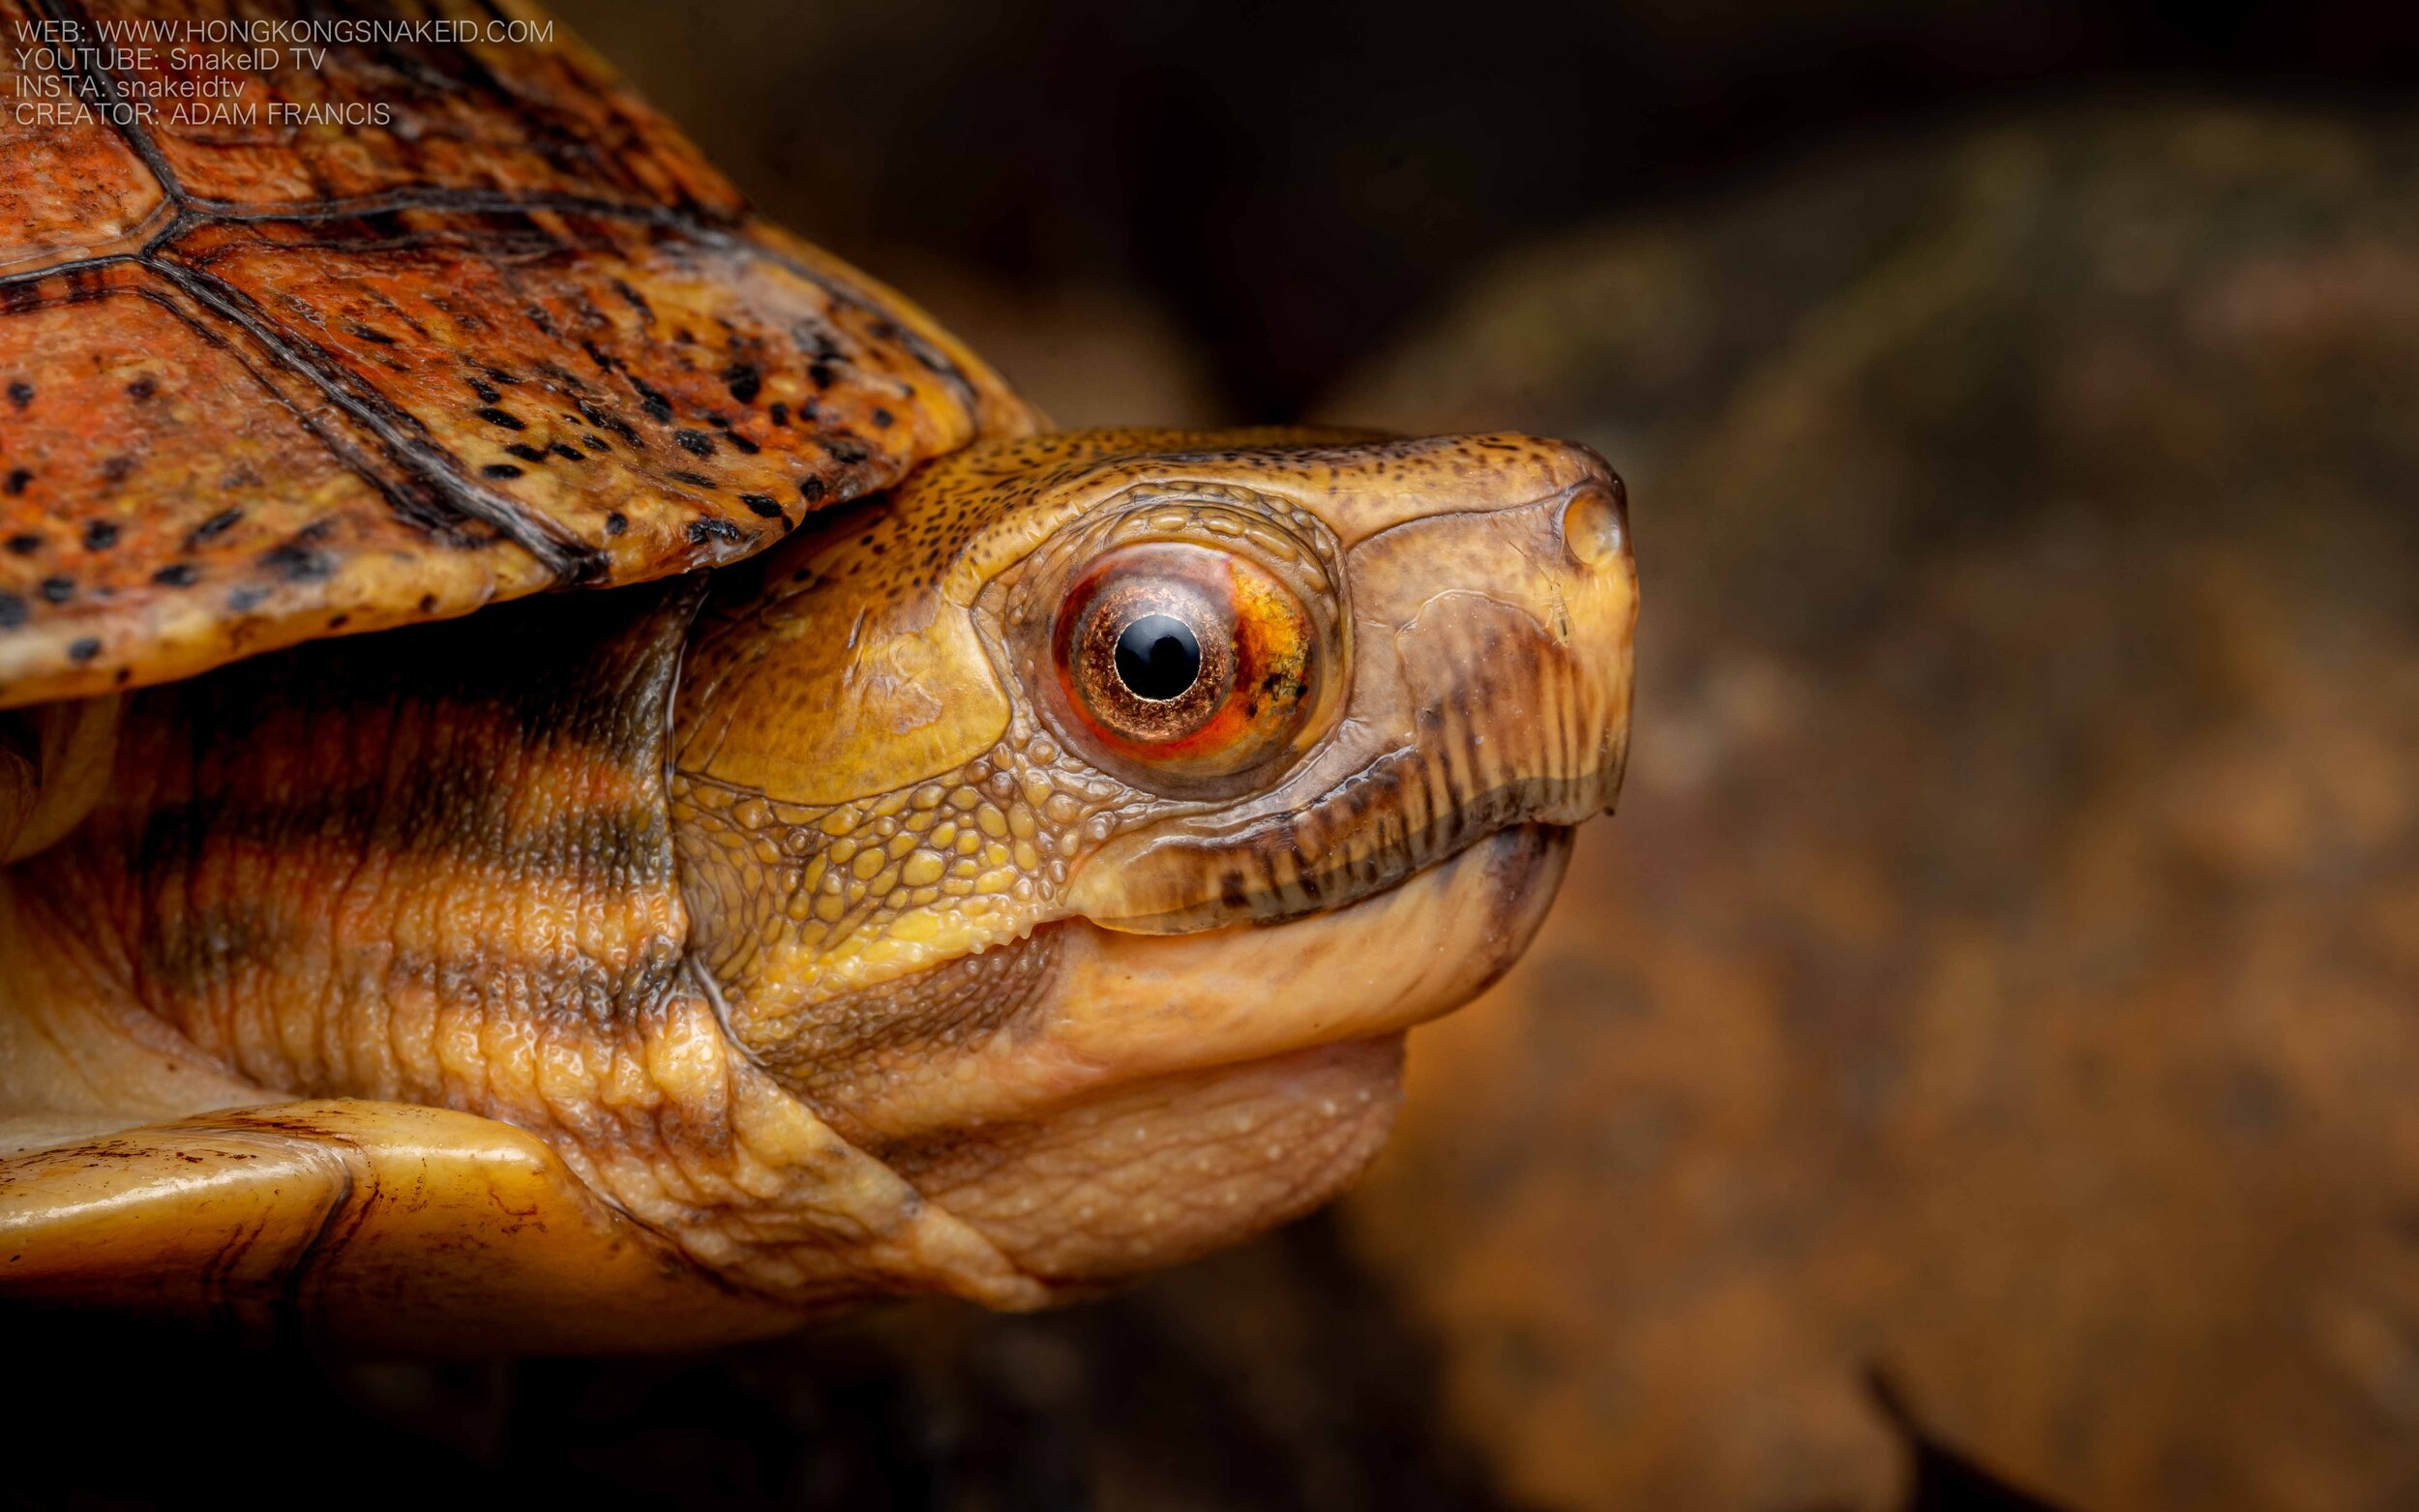 Beal's Four Eyed Turtle - Sacalia bealei